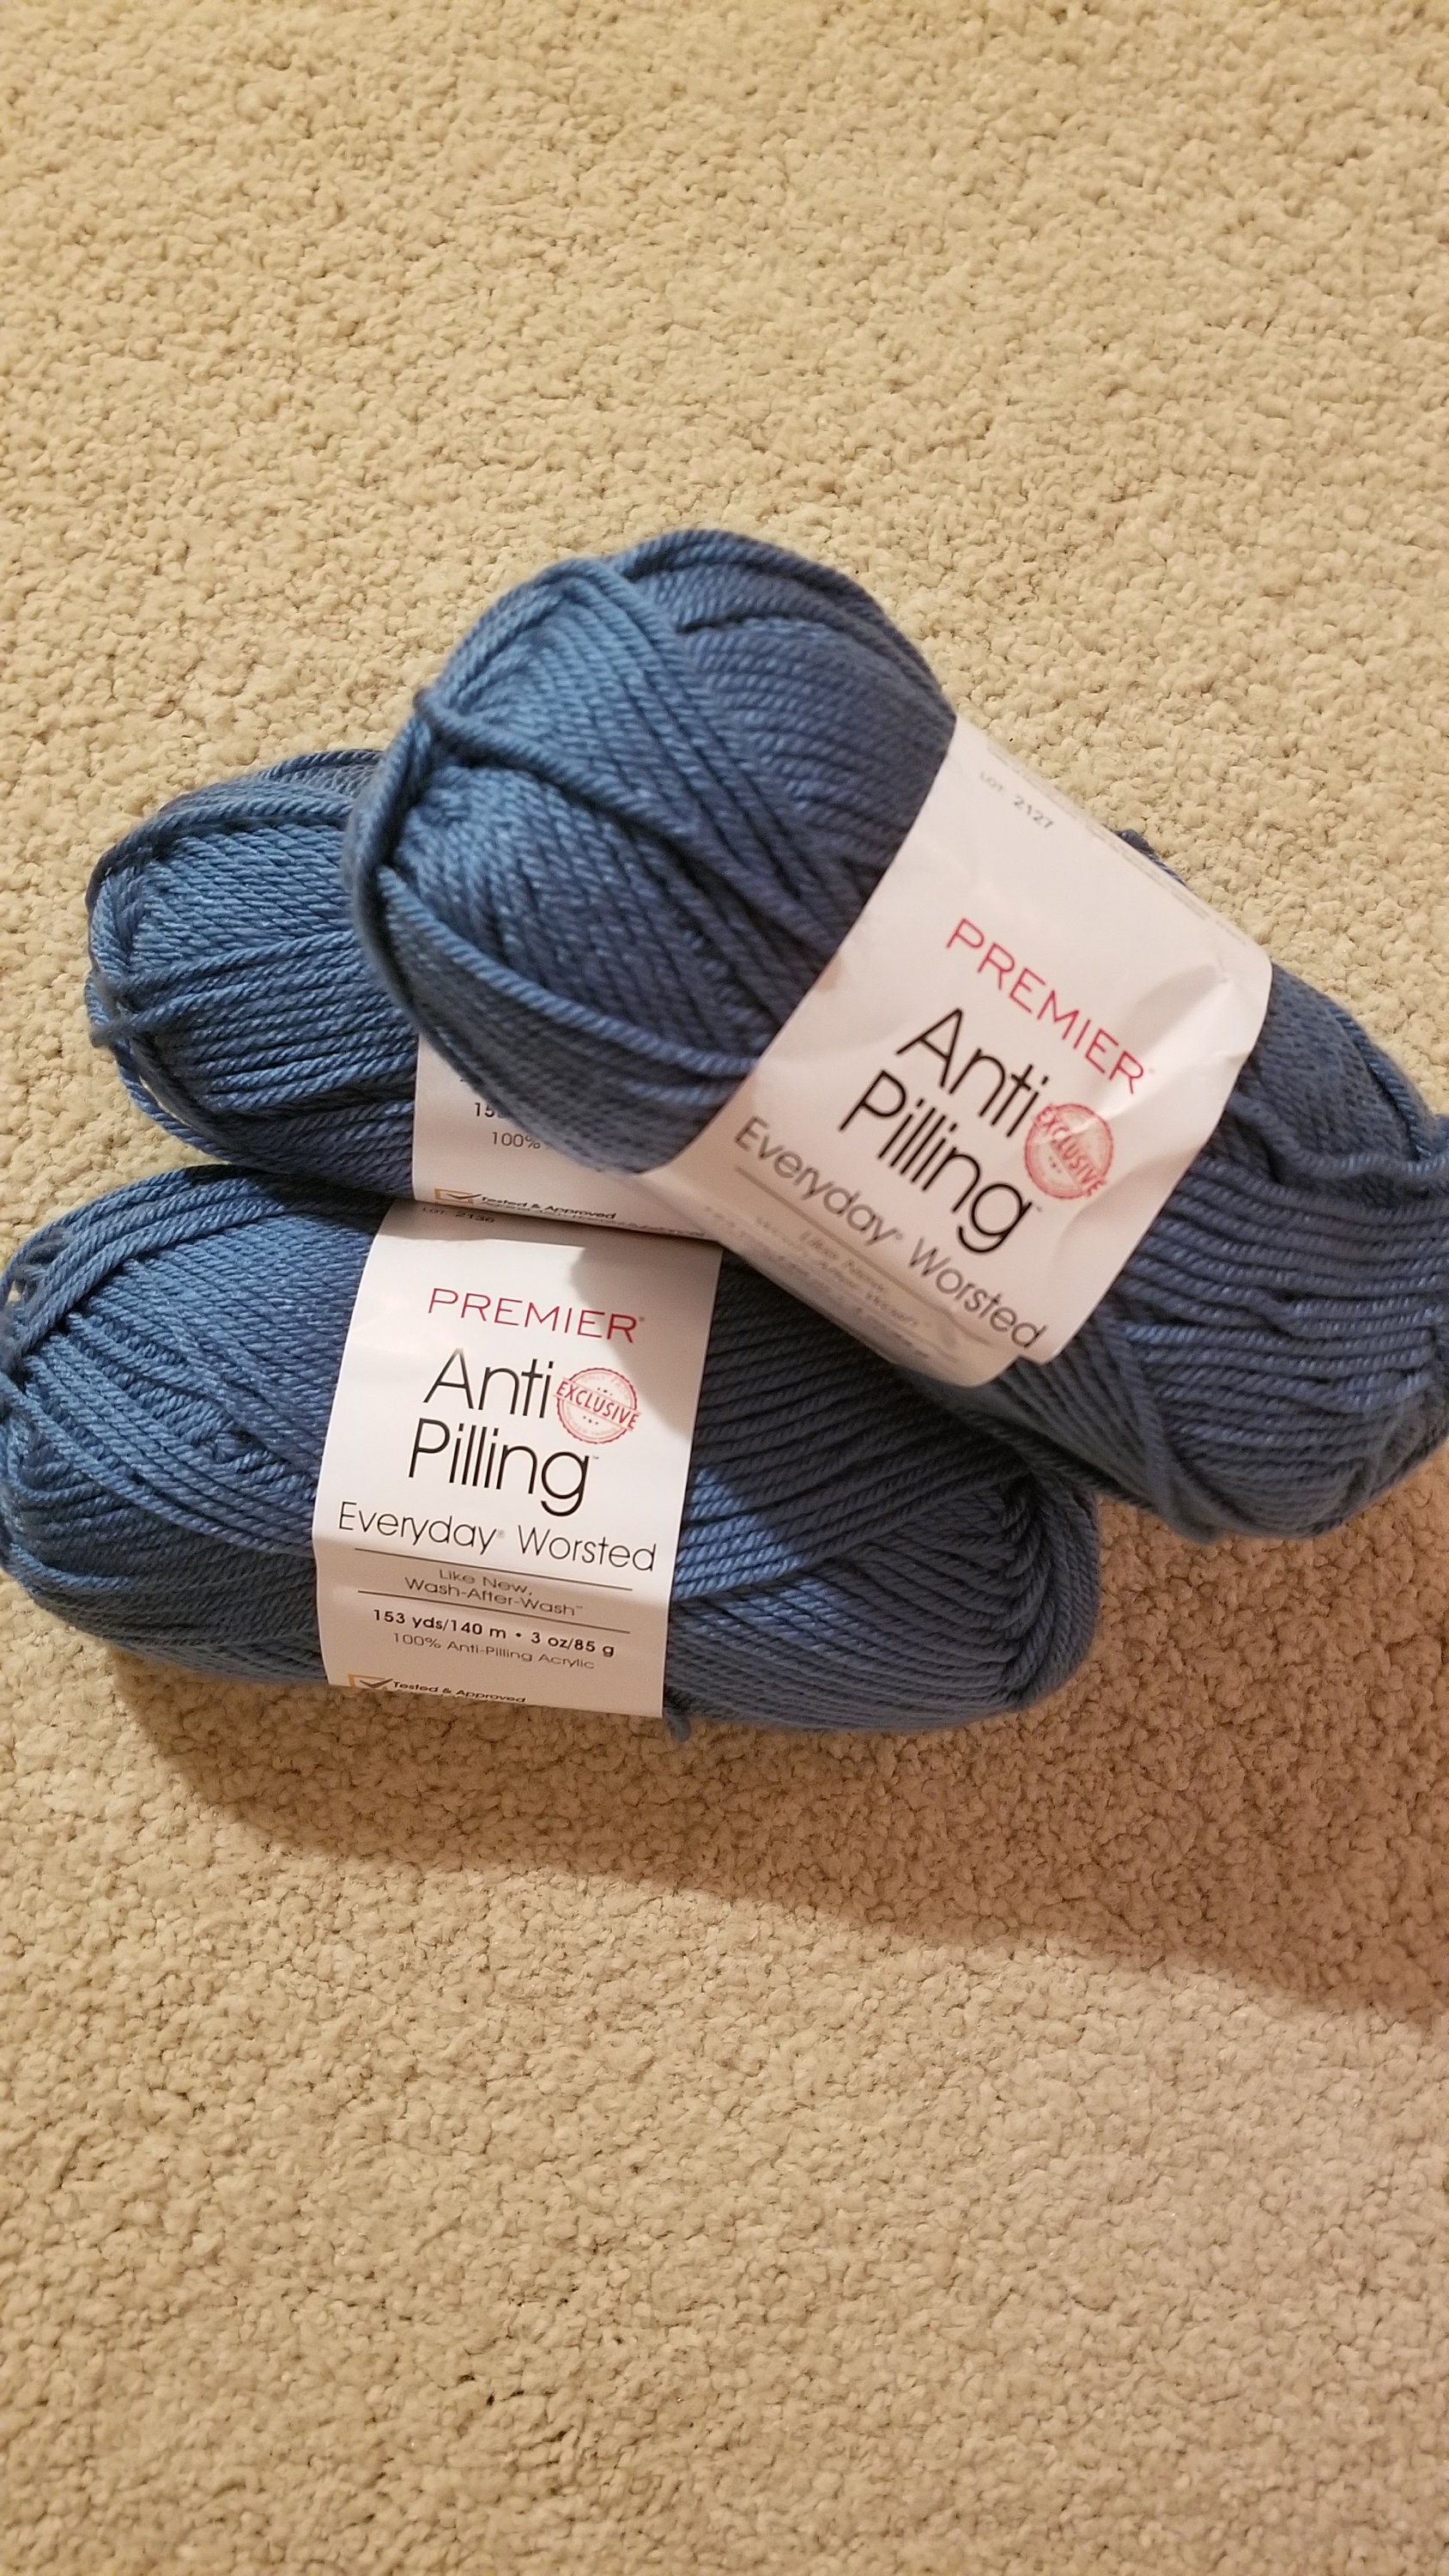  Premier Yarns Anti-Pilling Everyday Worsted Yarn, Soft Acrylic  Yarn, Ideal Yarn for Crocheting and Knitting, Machine Washable, 180 yds,  Green Apple